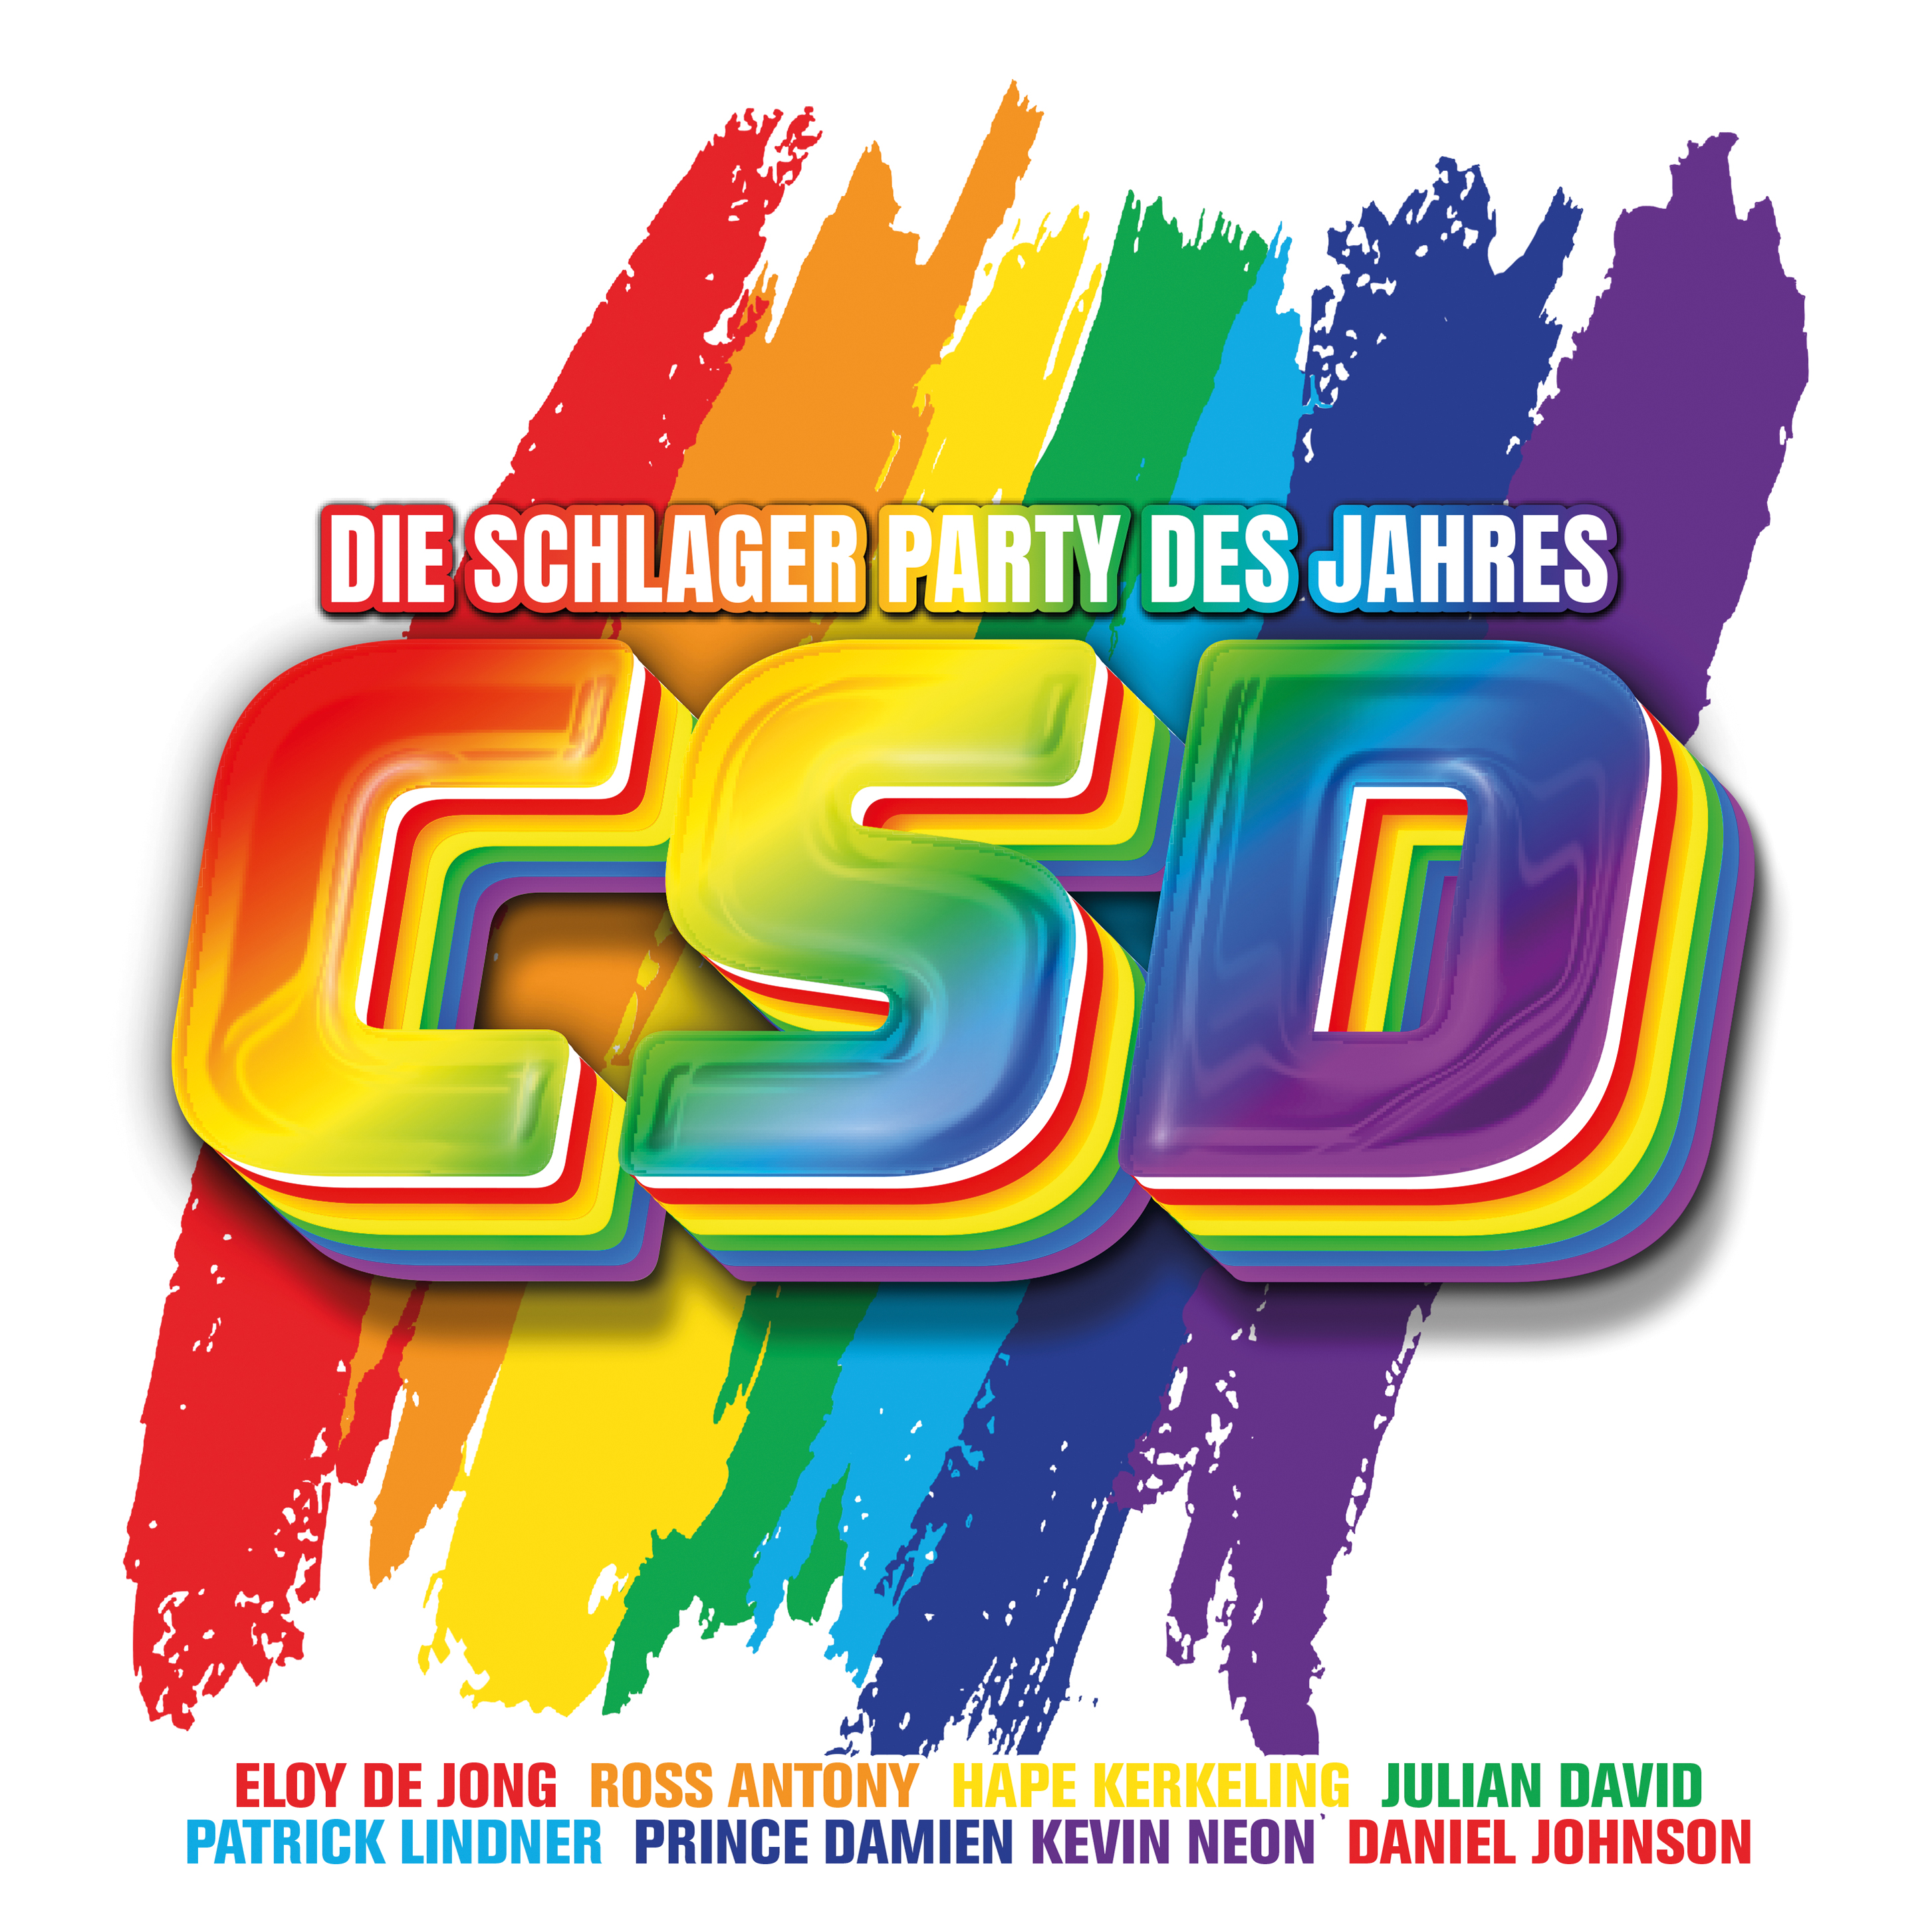 VARIOUS ARTISTS * CSD - Die Schlager Party des Jahres (CD)